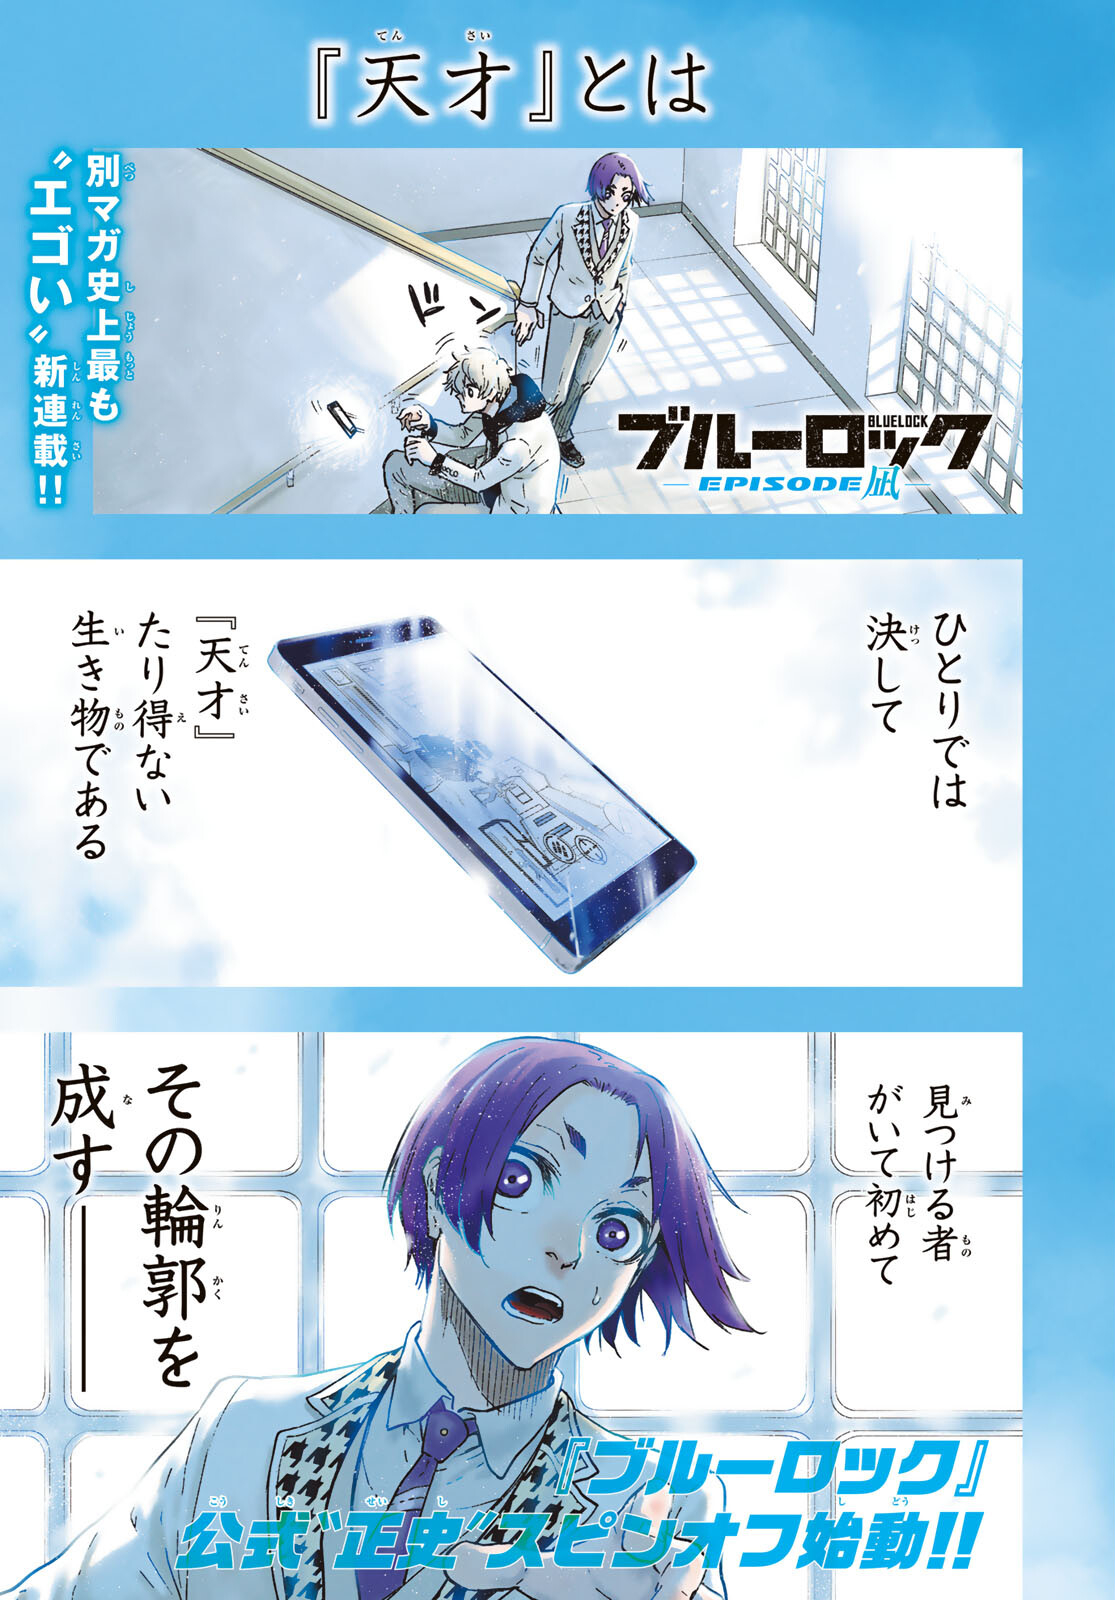 Chapter 15 (Episode Nagi), Blue Lock Wiki